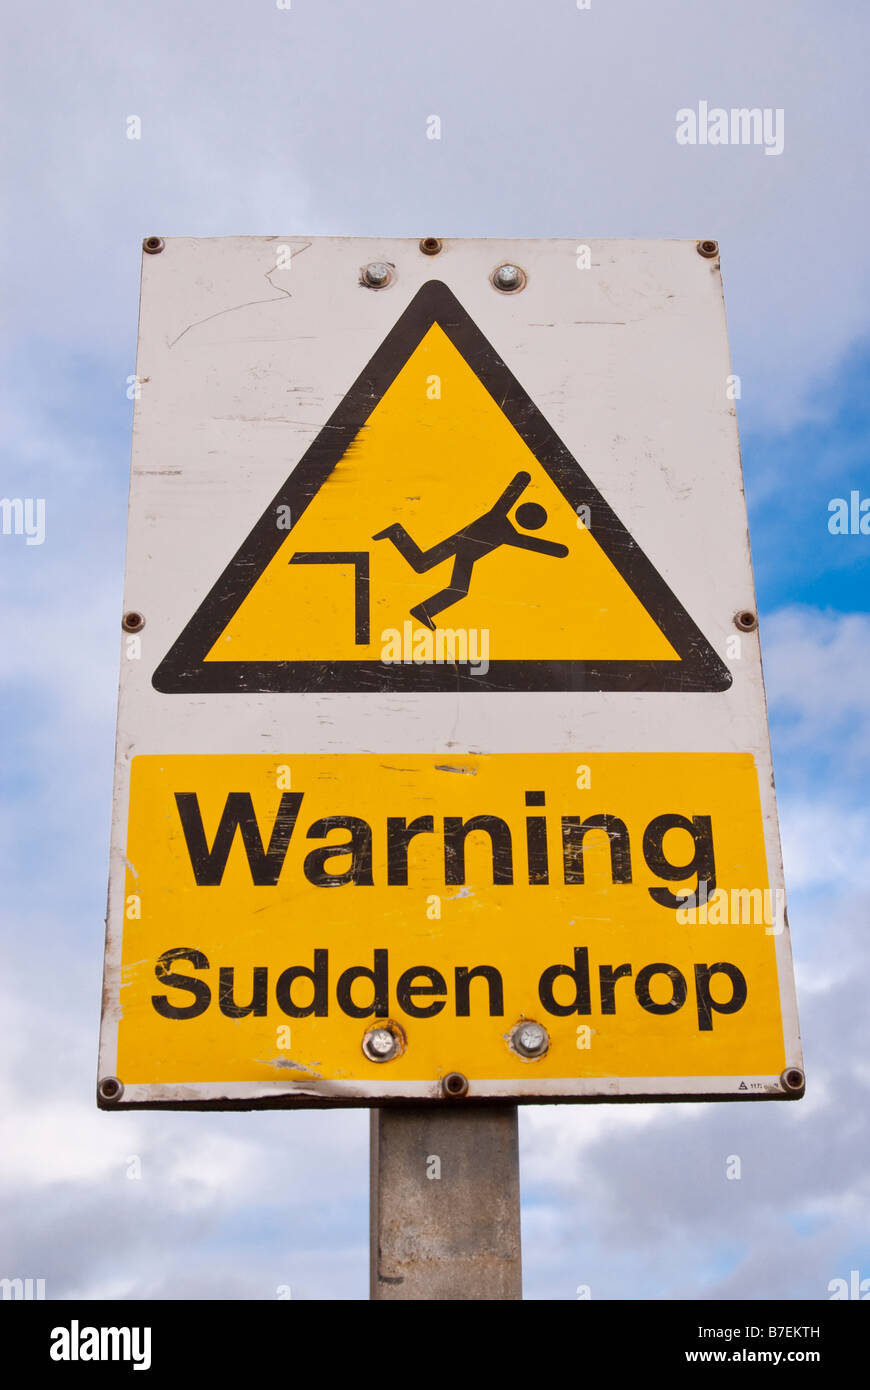 Warning sudden drop sign Stock Photo